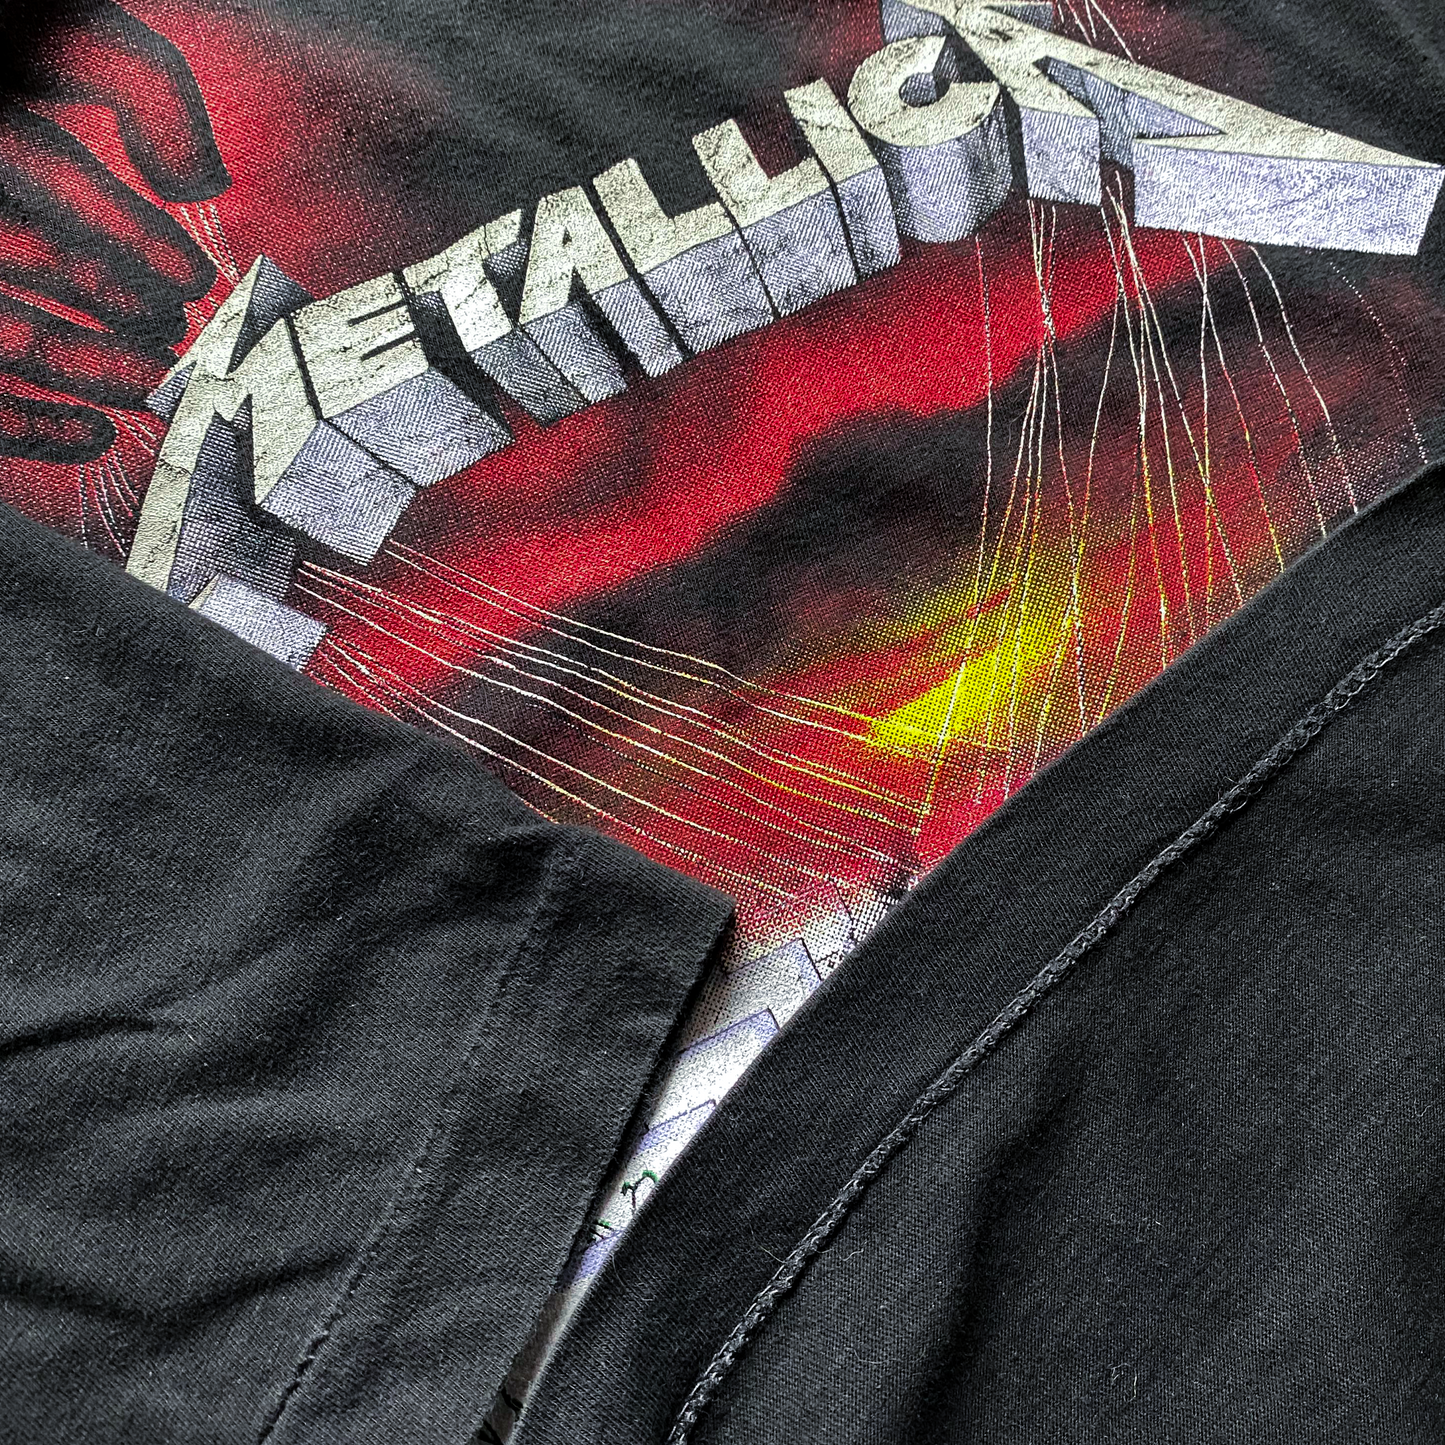 Metallica "Master Of Puppets" 1987